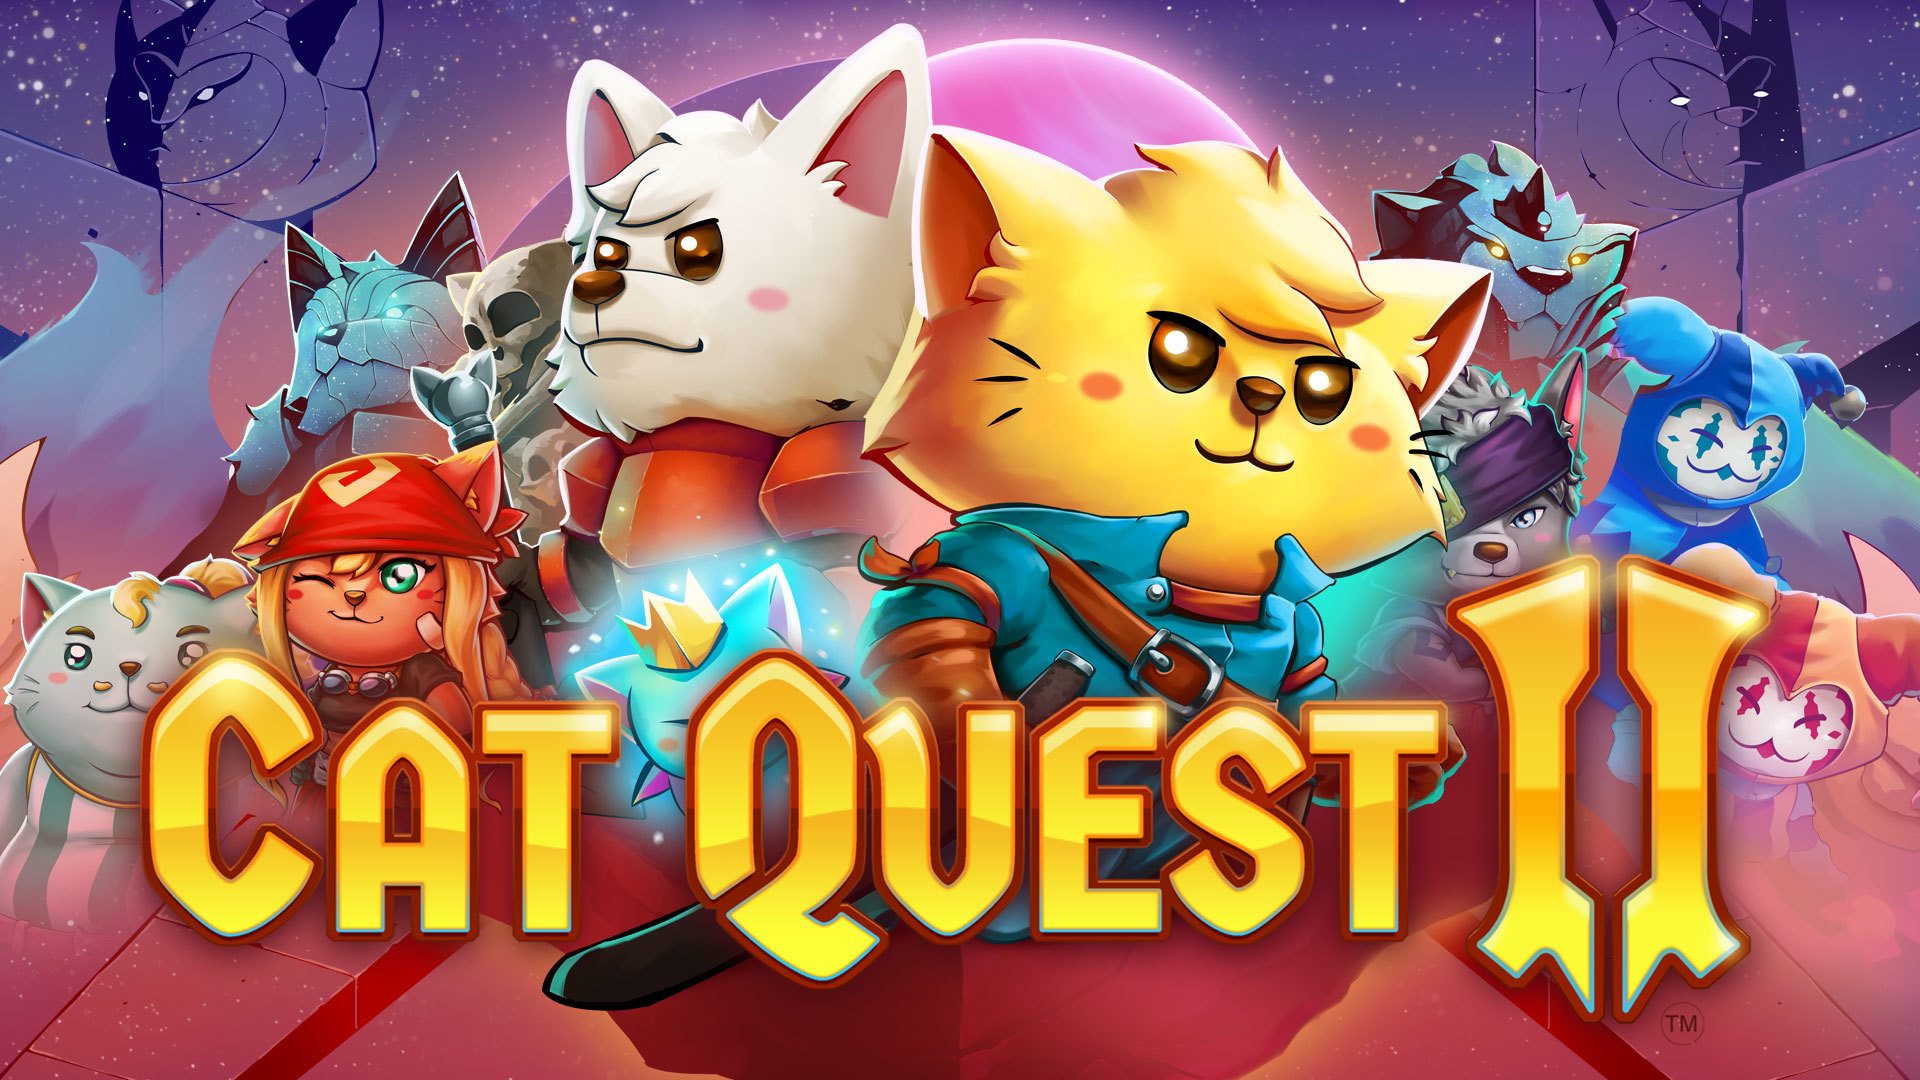 Meta quest 2 пк. Игра Cat Quest. Cat Quest II. Игра про кошку стим. Cat Quest 2 PC.